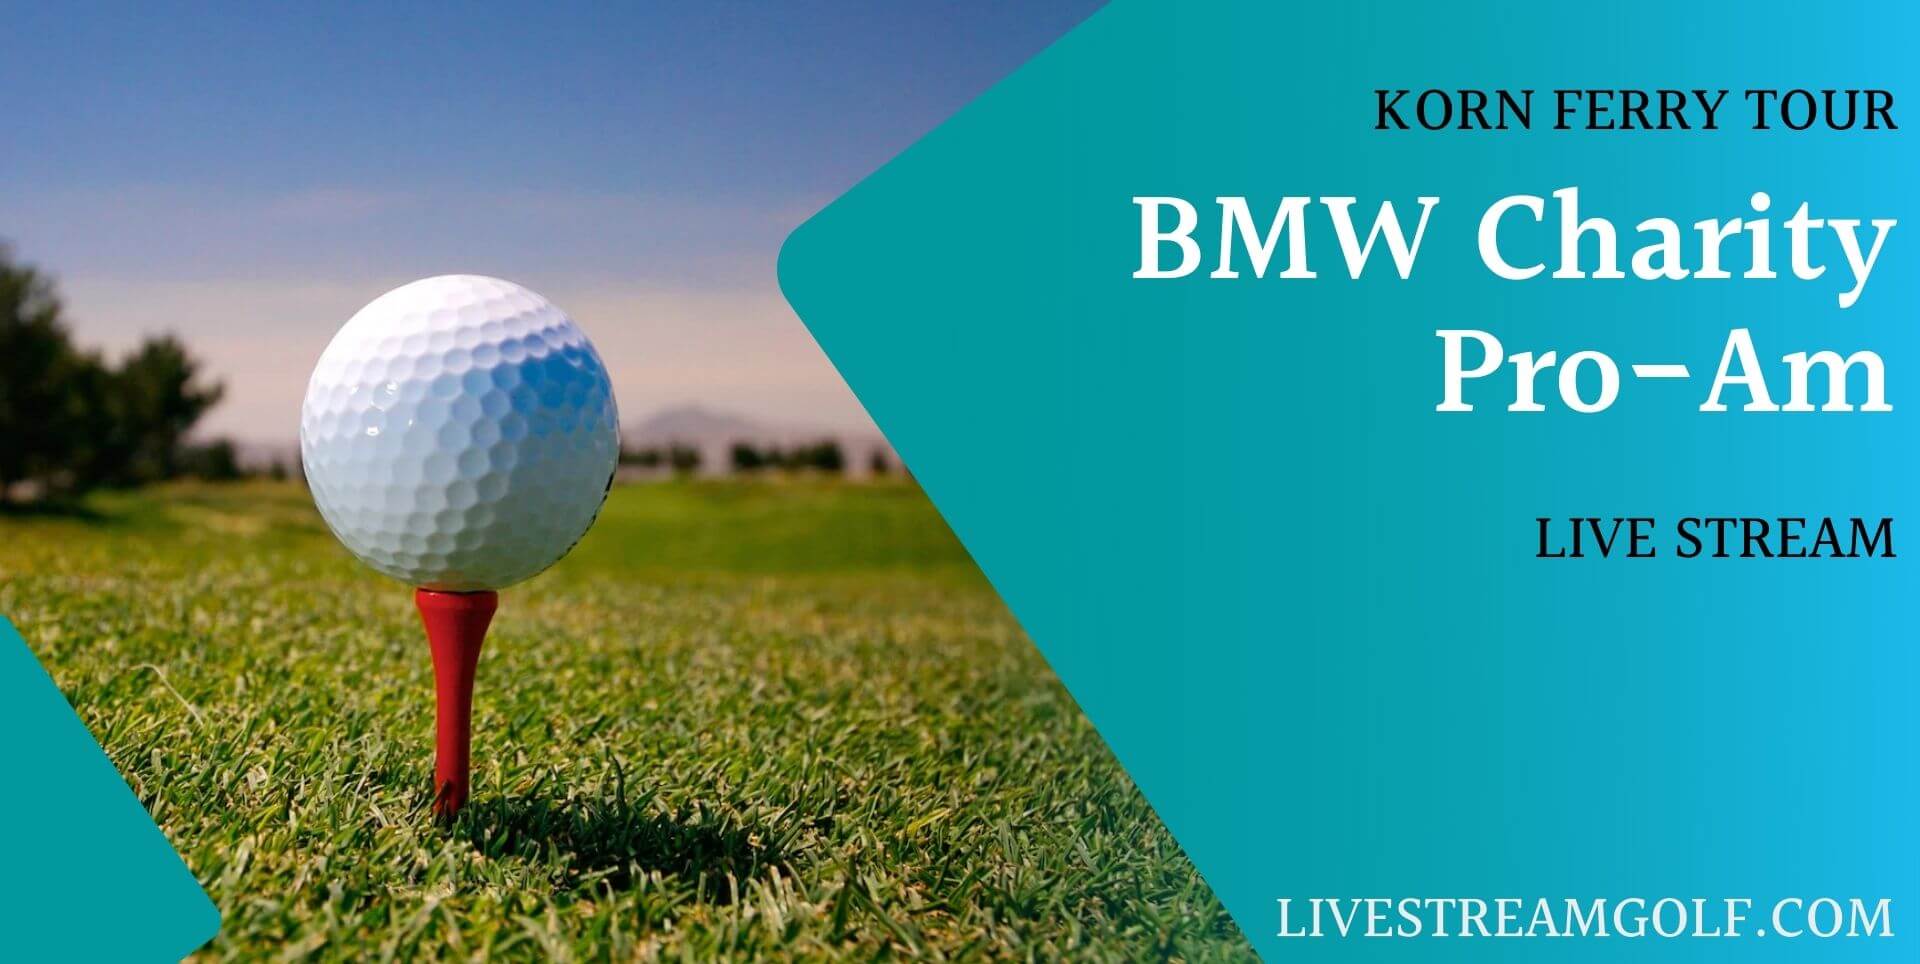 BMW Charity Pro-Am Day 4 Live Stream: Korn Ferry 2022